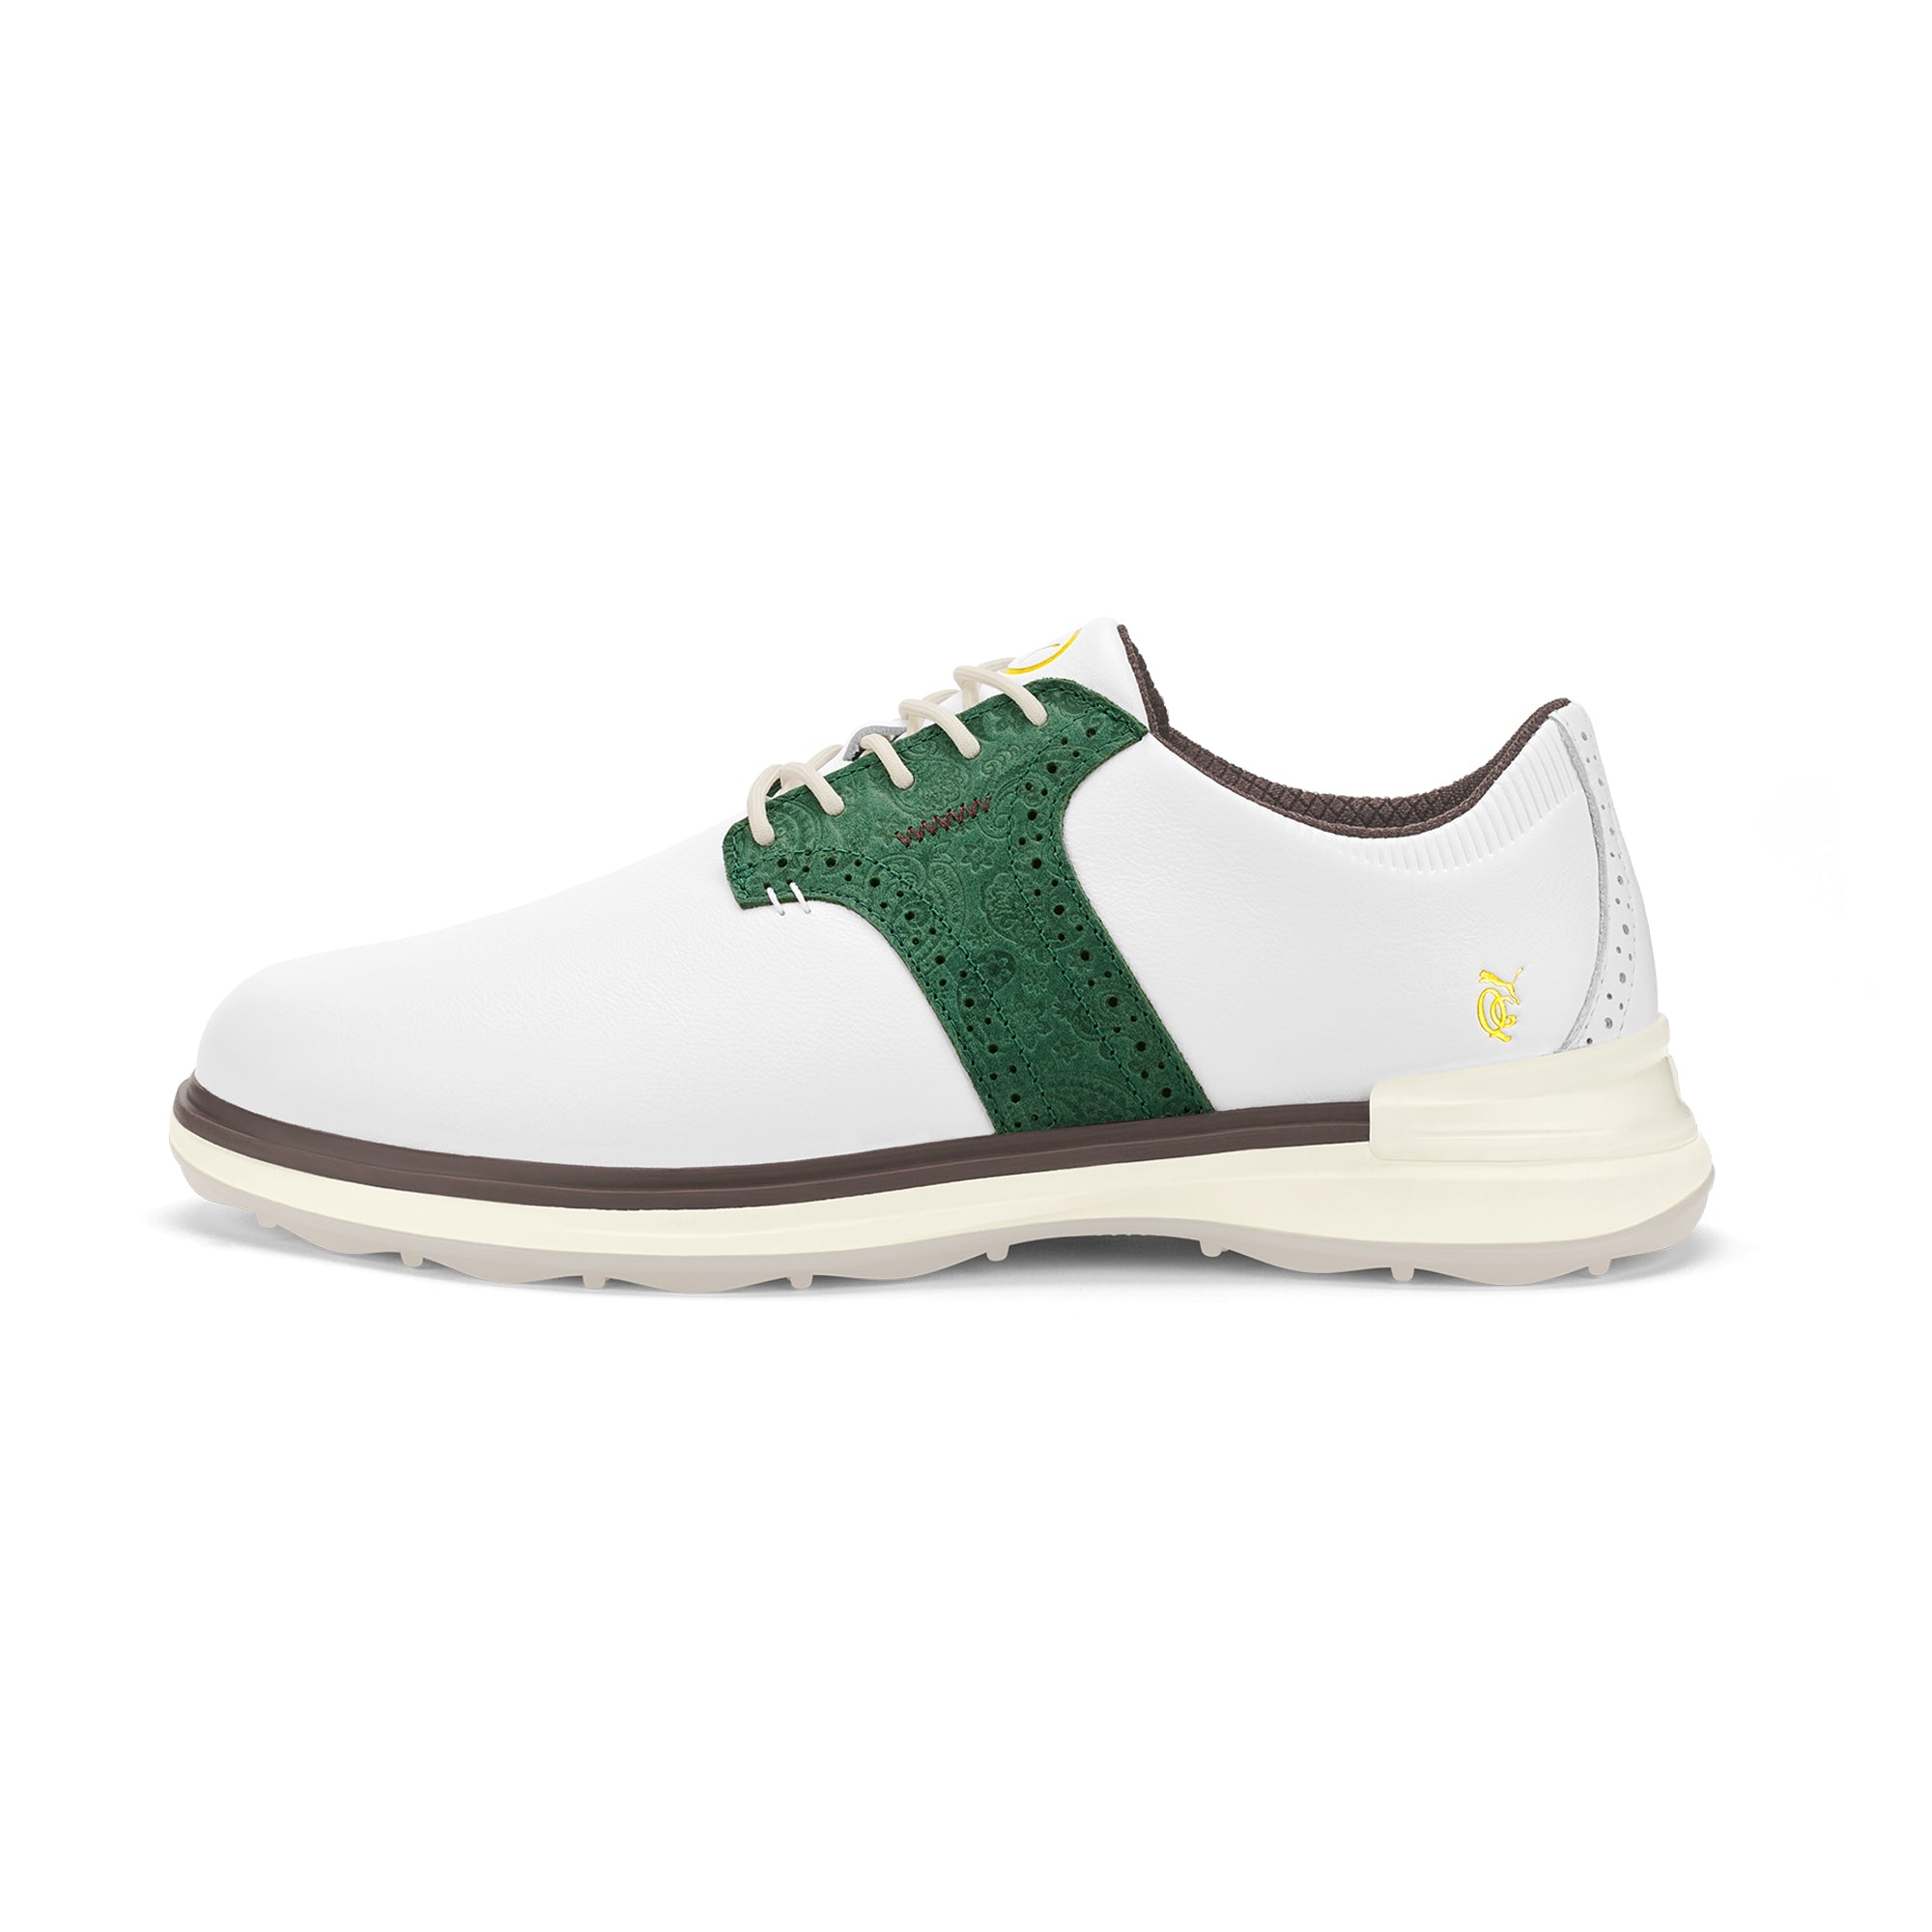 Limited Edition - Puma x Quiet Golf AVANT Spikeless Golf Shoes